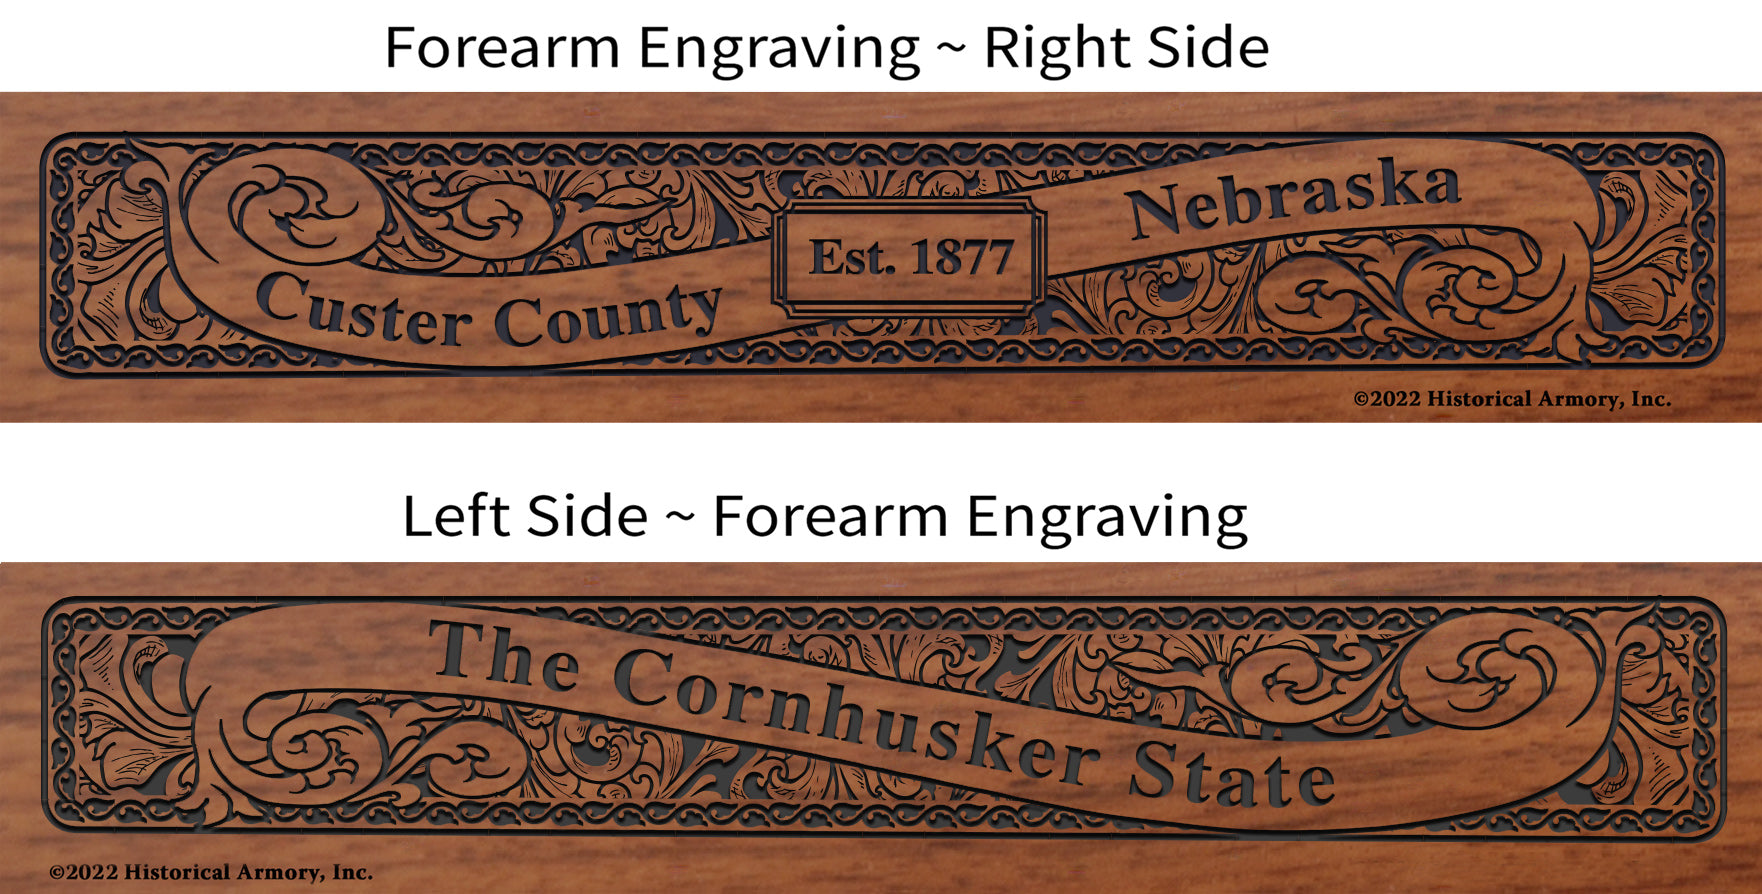 Custer County Nebraska Engraved Rifle Forearm